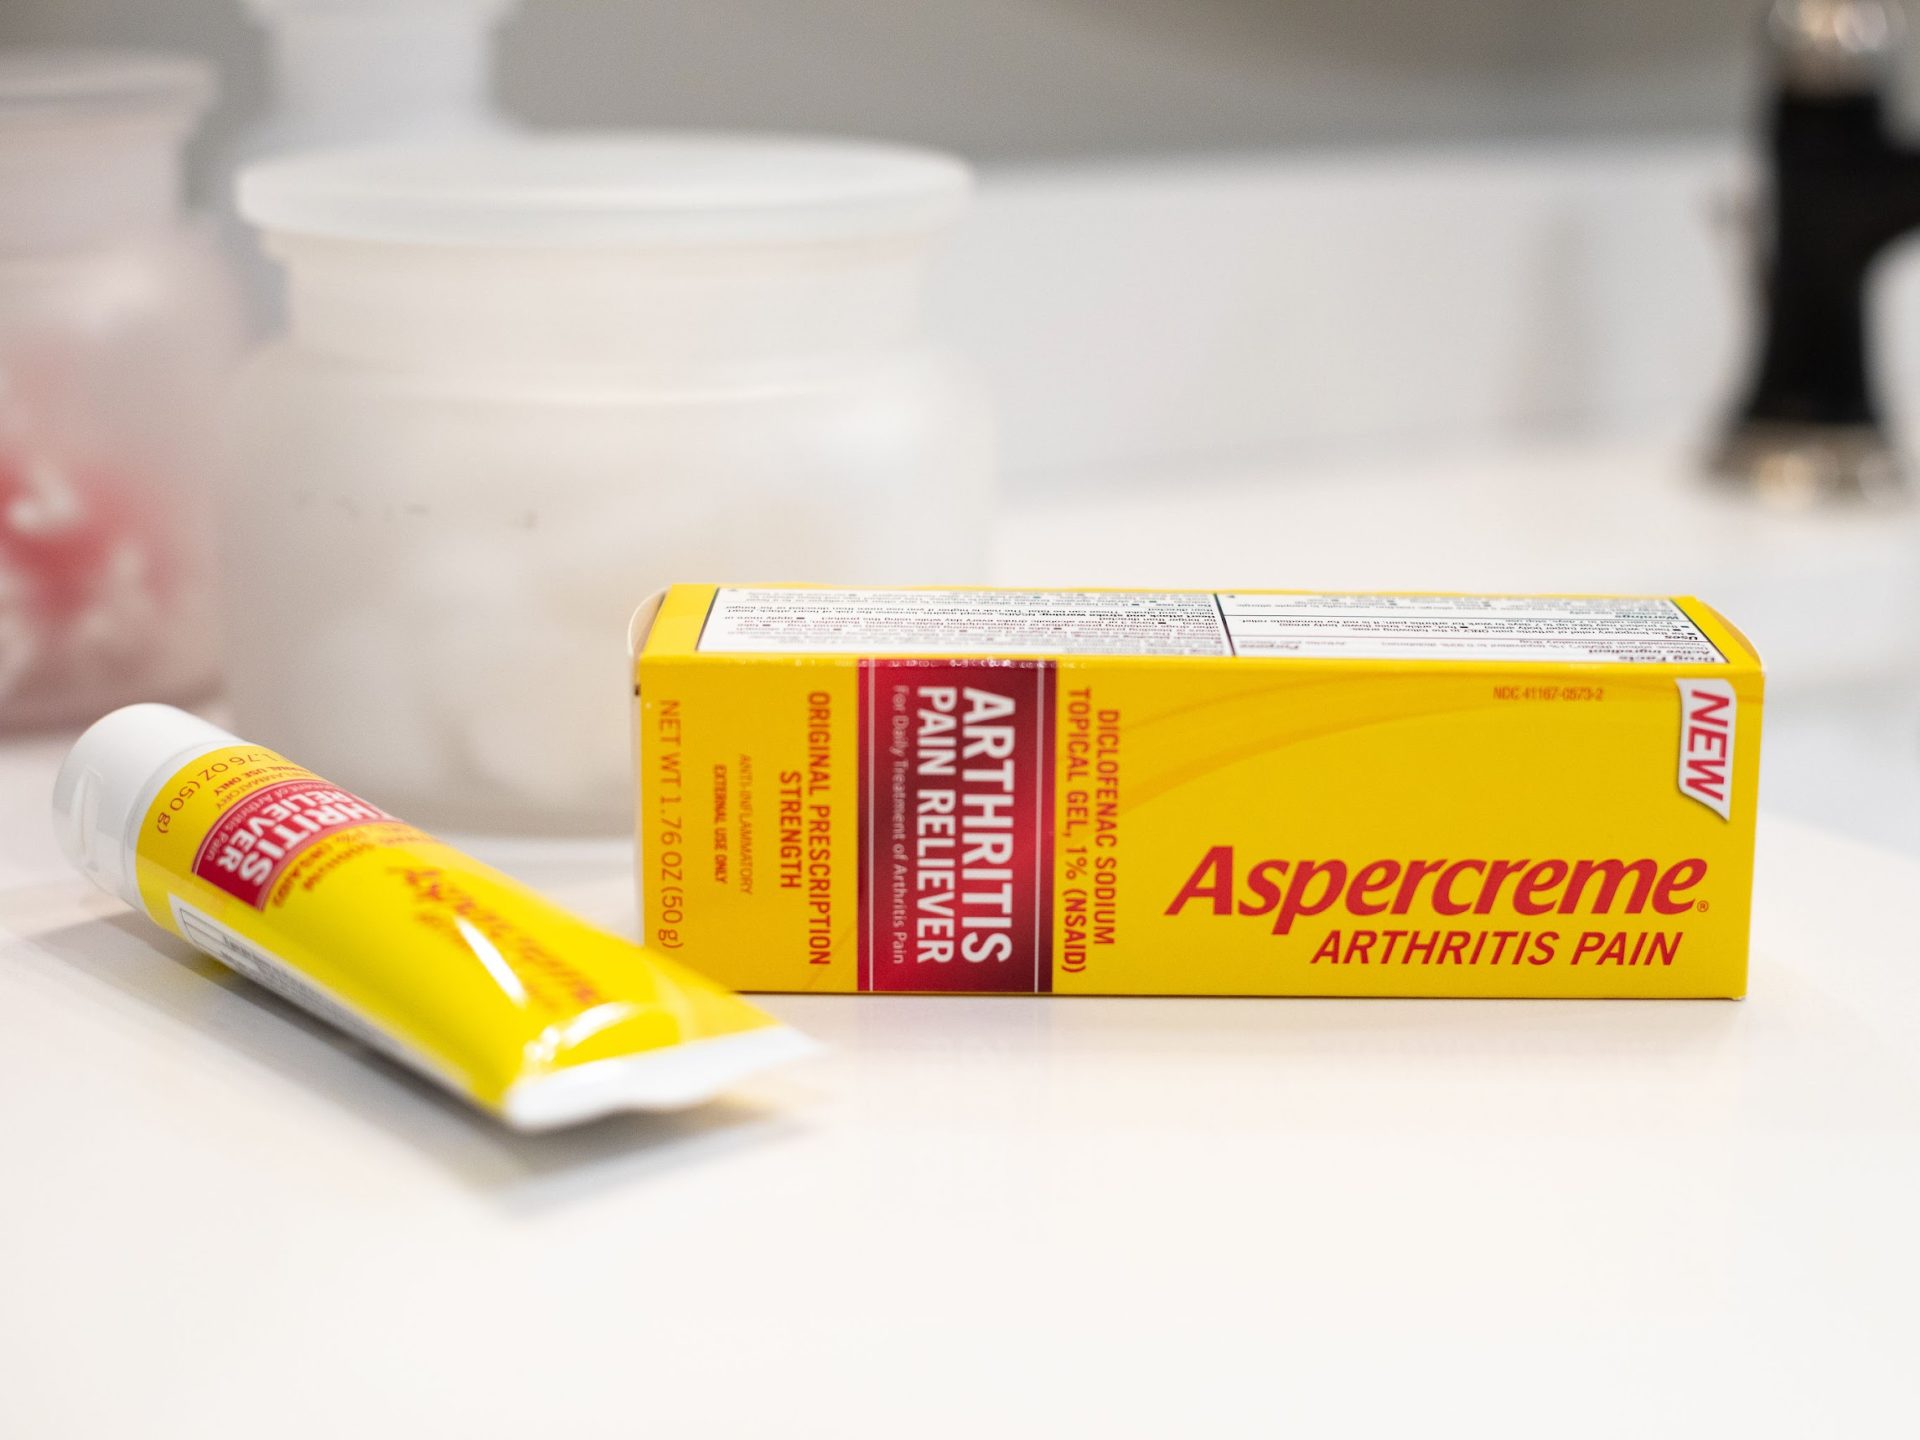 Aspercreme Products As Low As $4.99 At Kroger (Regular Price $8.49) – Plus Cheap Aspercreme Arthritis